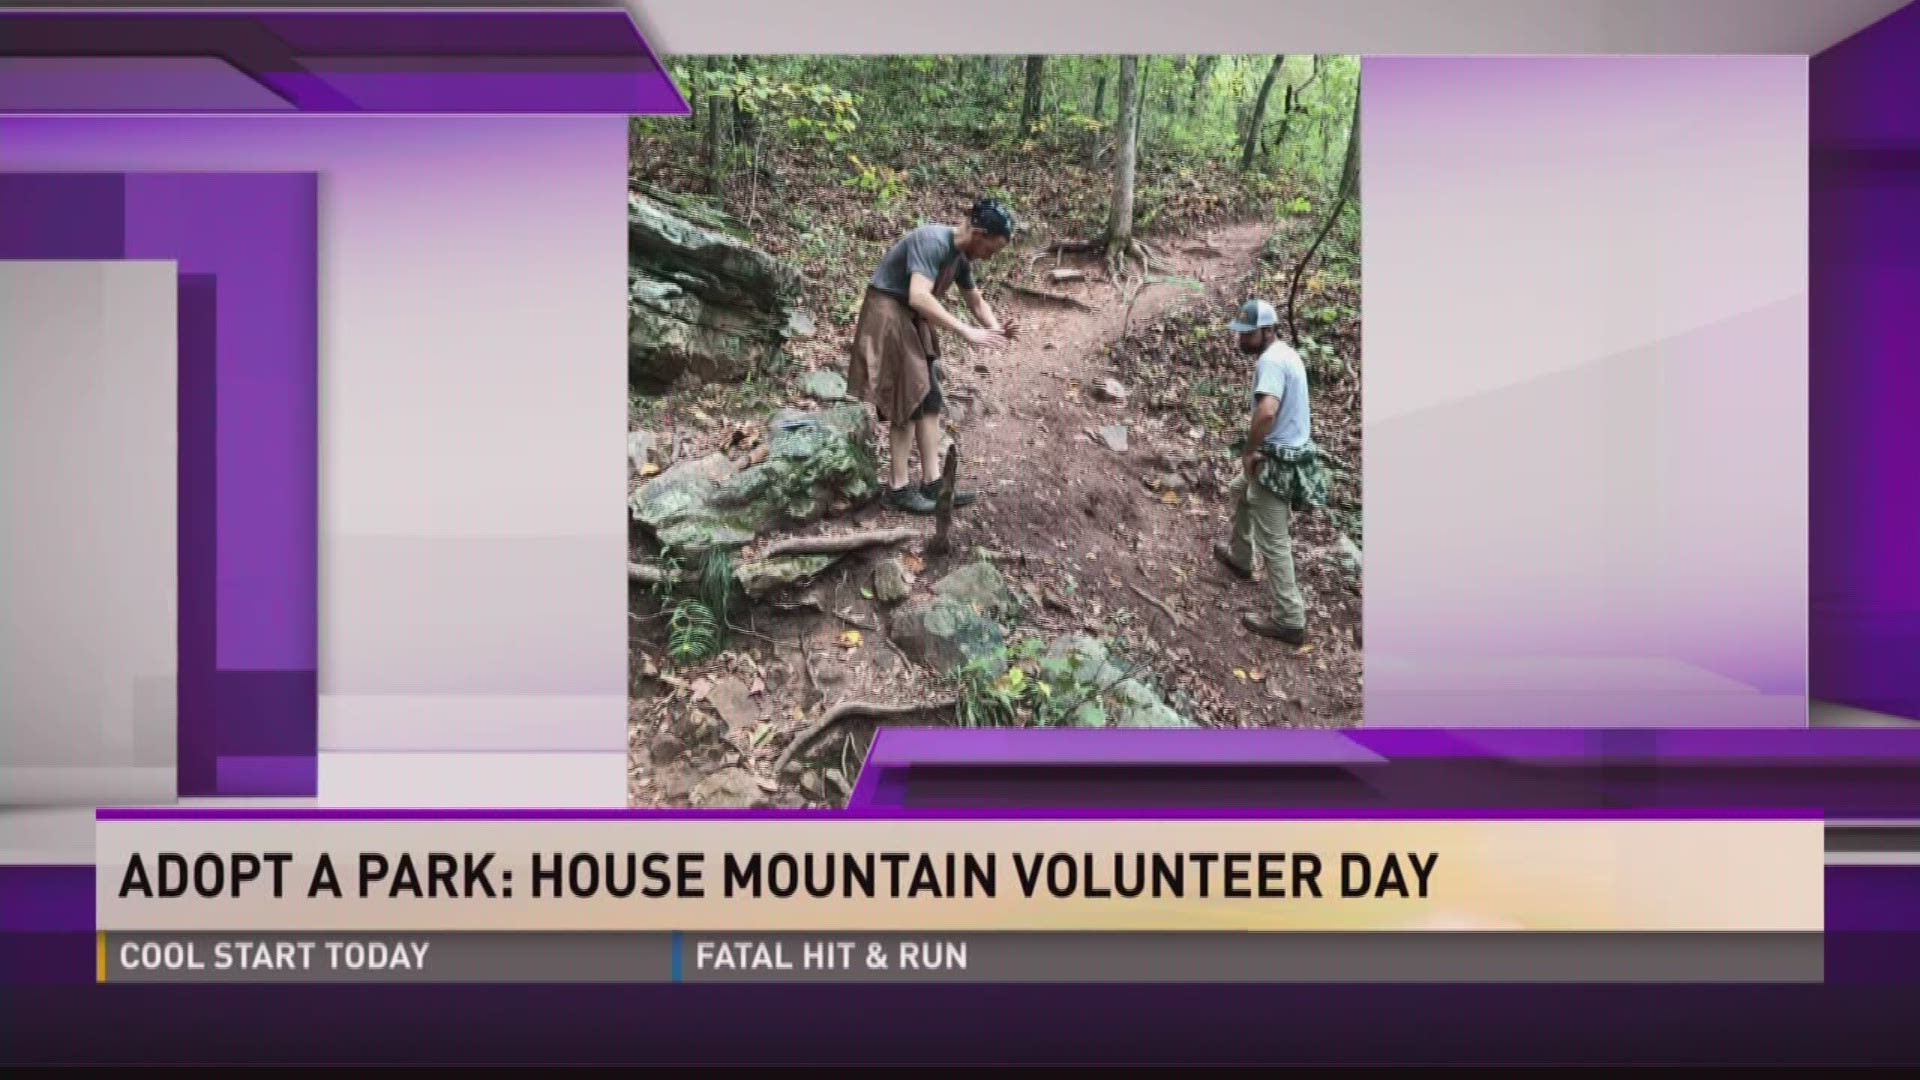 Adpot A Park: House Mountain Volunteer Day